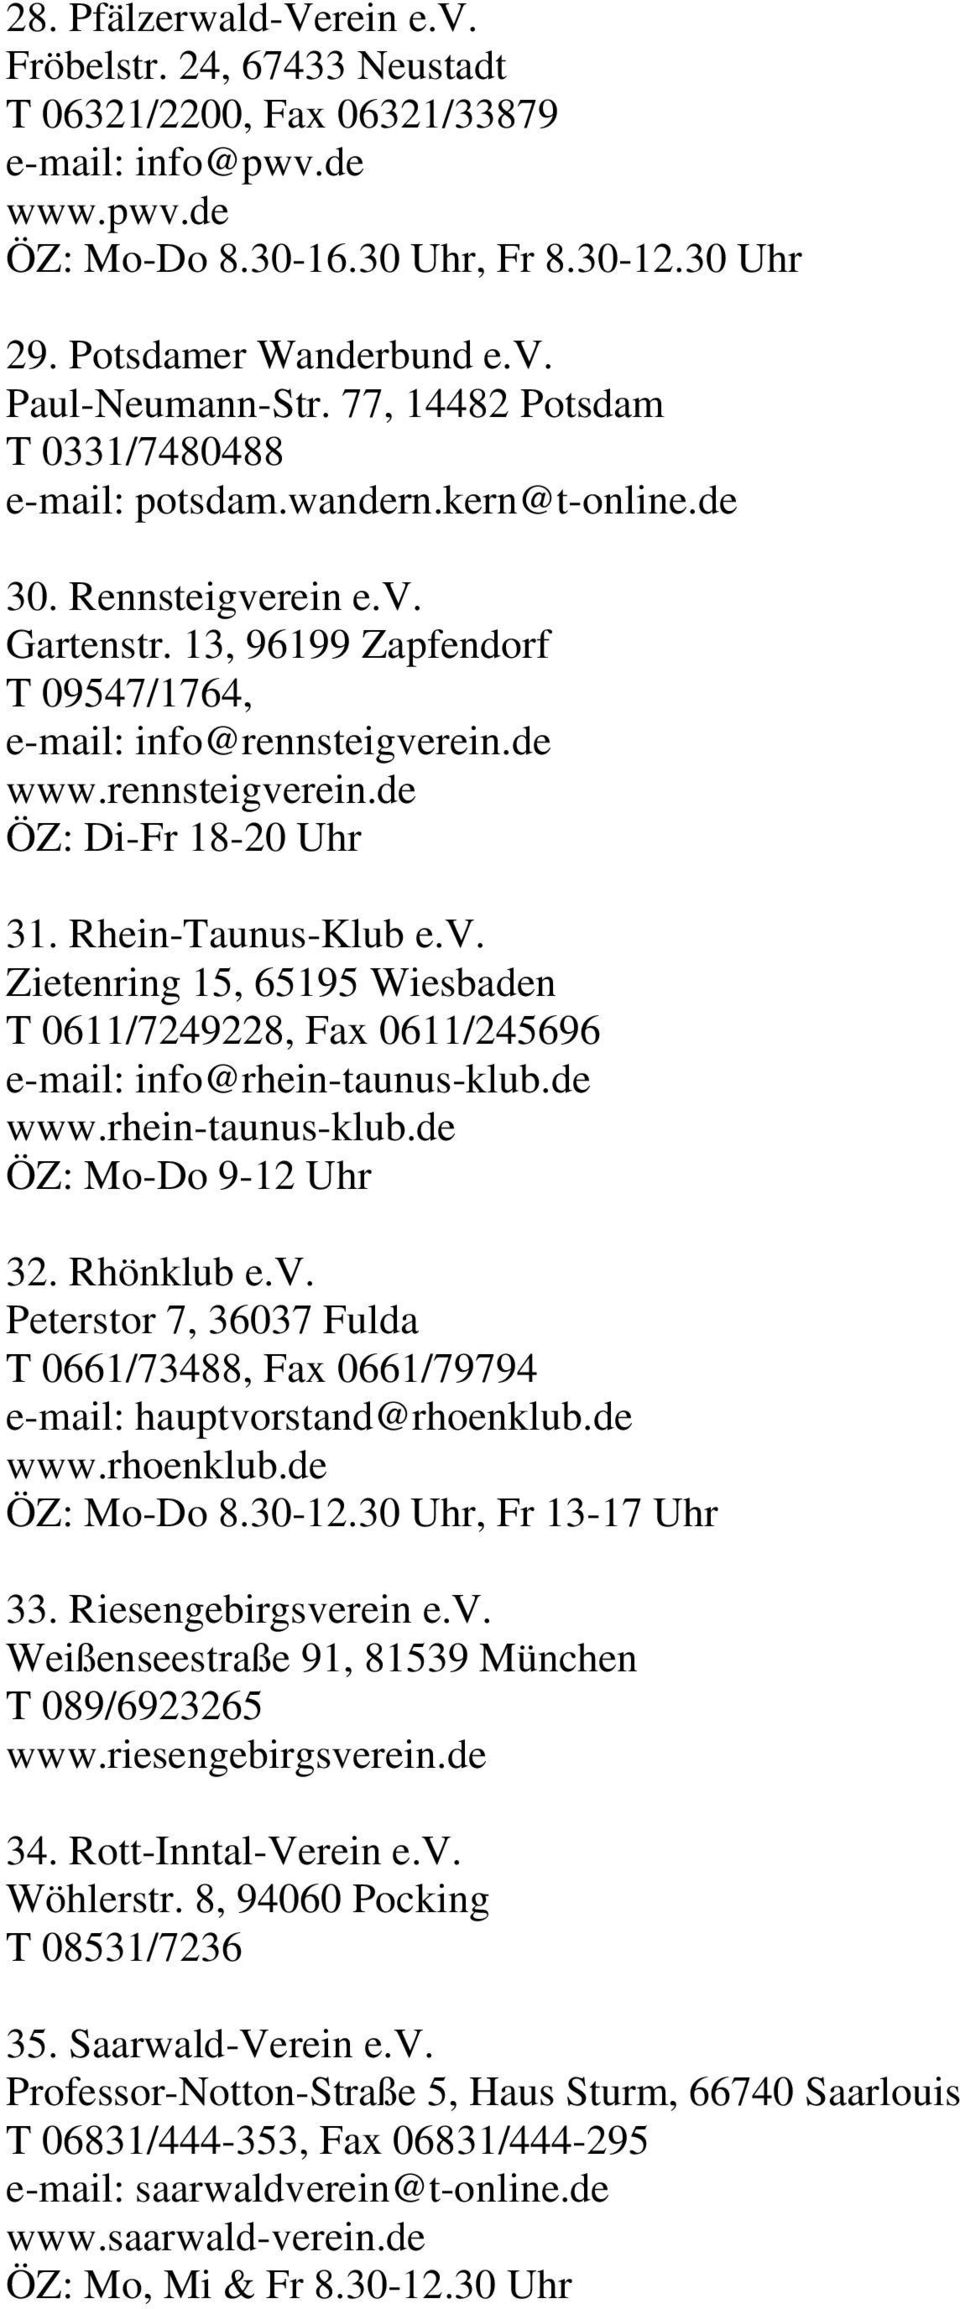 Rhein-Taunus-Klub e.v. Zietenring 15, 65195 Wiesbaden T 0611/7249228, Fax 0611/245696 e-mail: info@rhein-taunus-klub.de www.rhein-taunus-klub.de ÖZ: Mo-Do 9-12 Uhr 32. Rhönklub e.v. Peterstor 7, 36037 Fulda T 0661/73488, Fax 0661/79794 e-mail: hauptvorstand@rhoenklub.